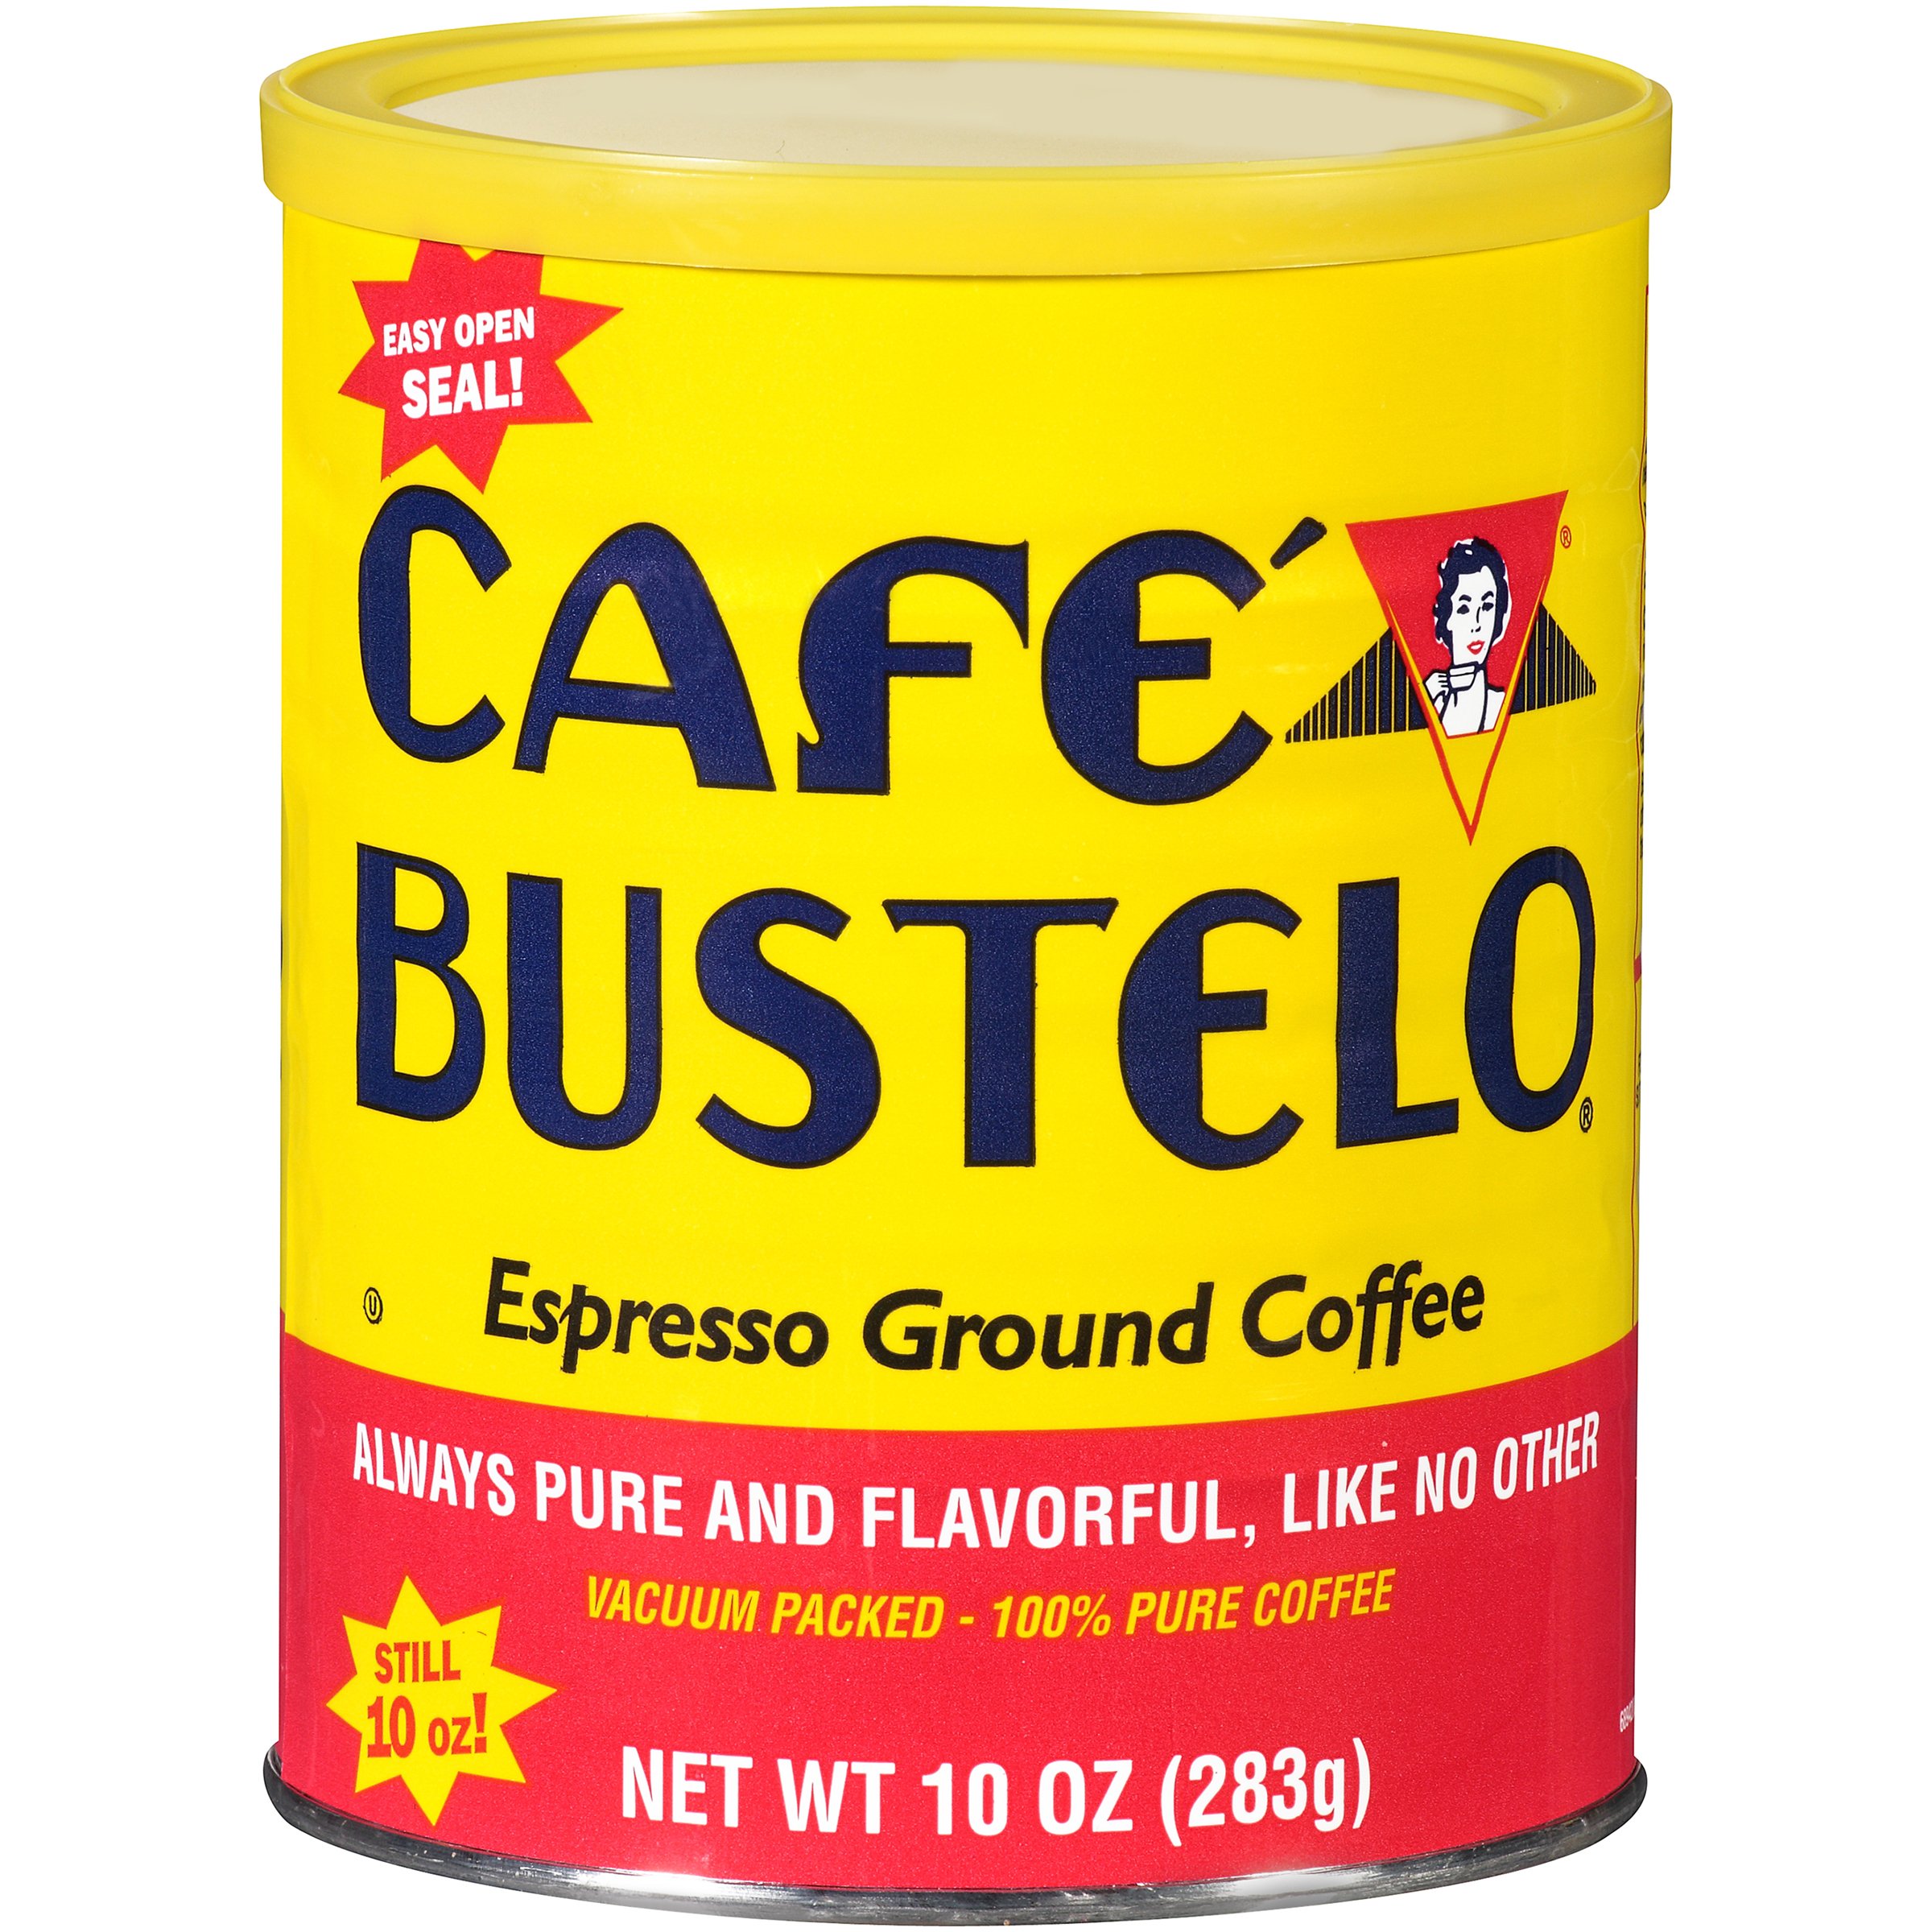 Cafe Bustelo Espresso Ground Coffee Shop Coffee At H E B